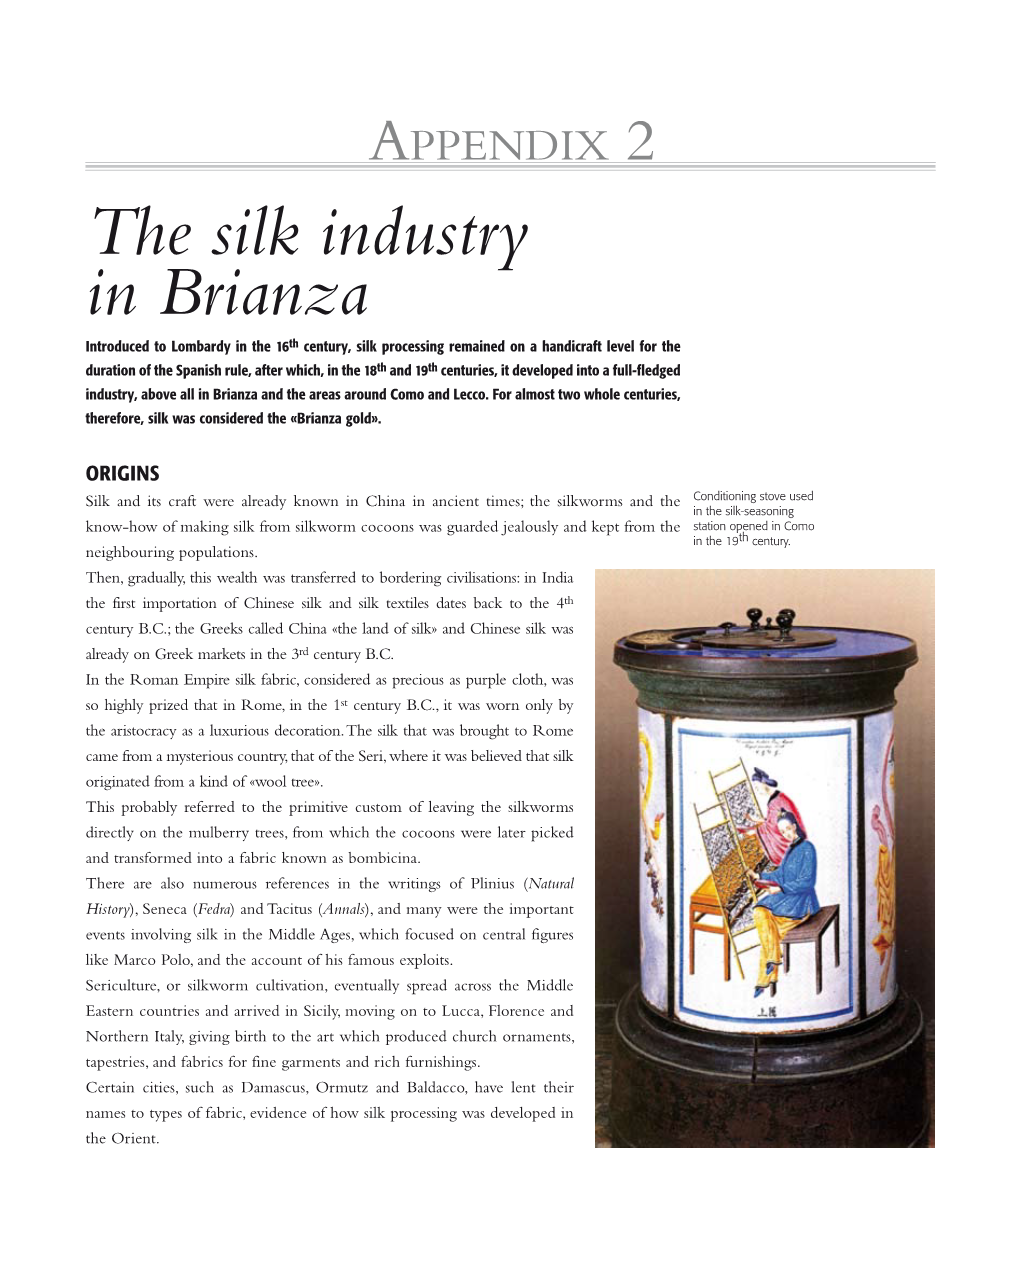 The Silk Industry in Brianza